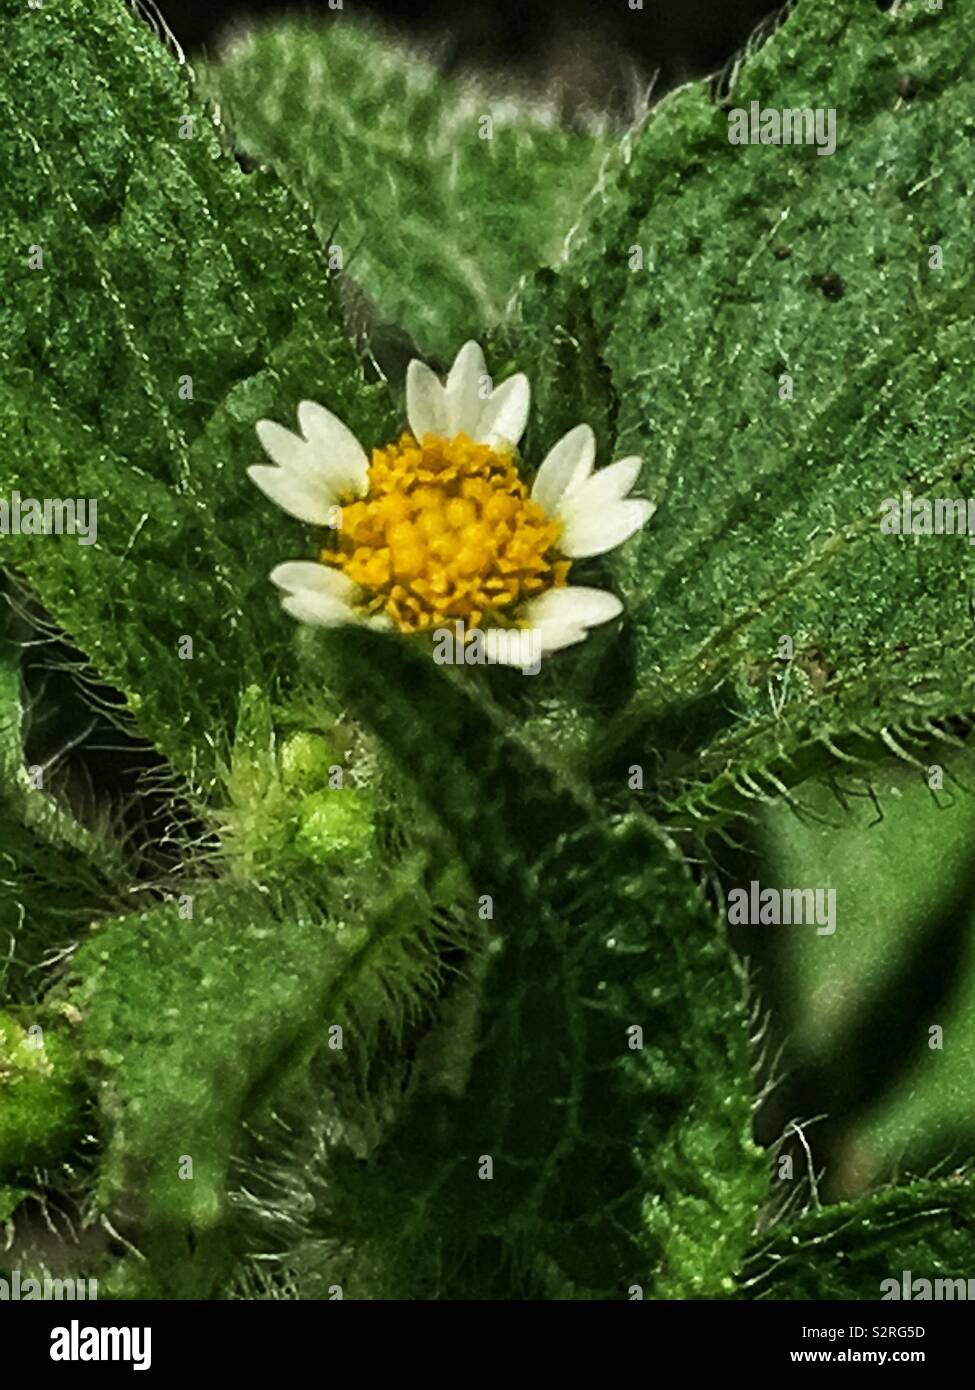 Super tiny wild dwarf creeping daisy, Chrysanthemum paludosum, c. Paludosum, wildflower in full bloom with white petals and yellow center. Stock Photo